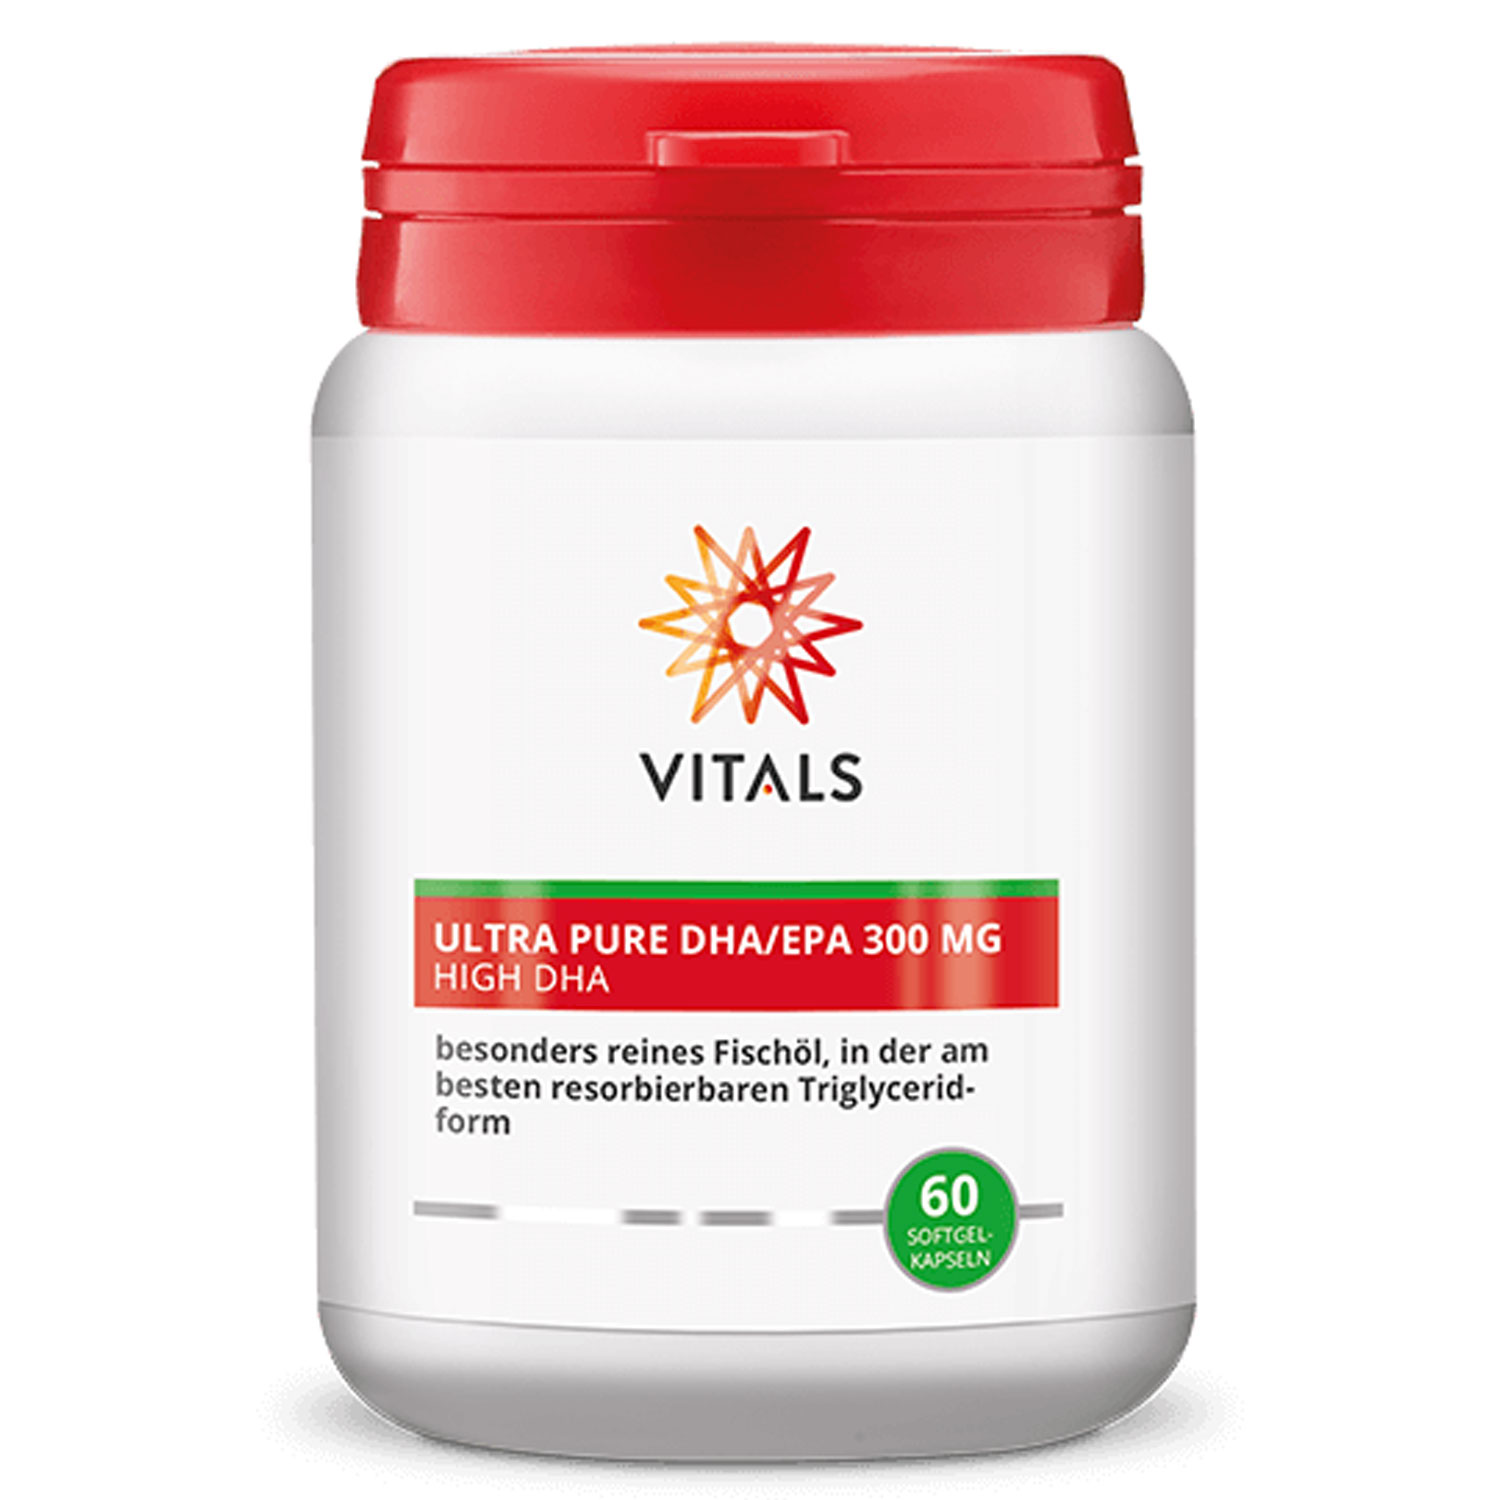 Ultra Pure DHA/EPA 300 mg von Vitals - 60 Softgel-Kapseln